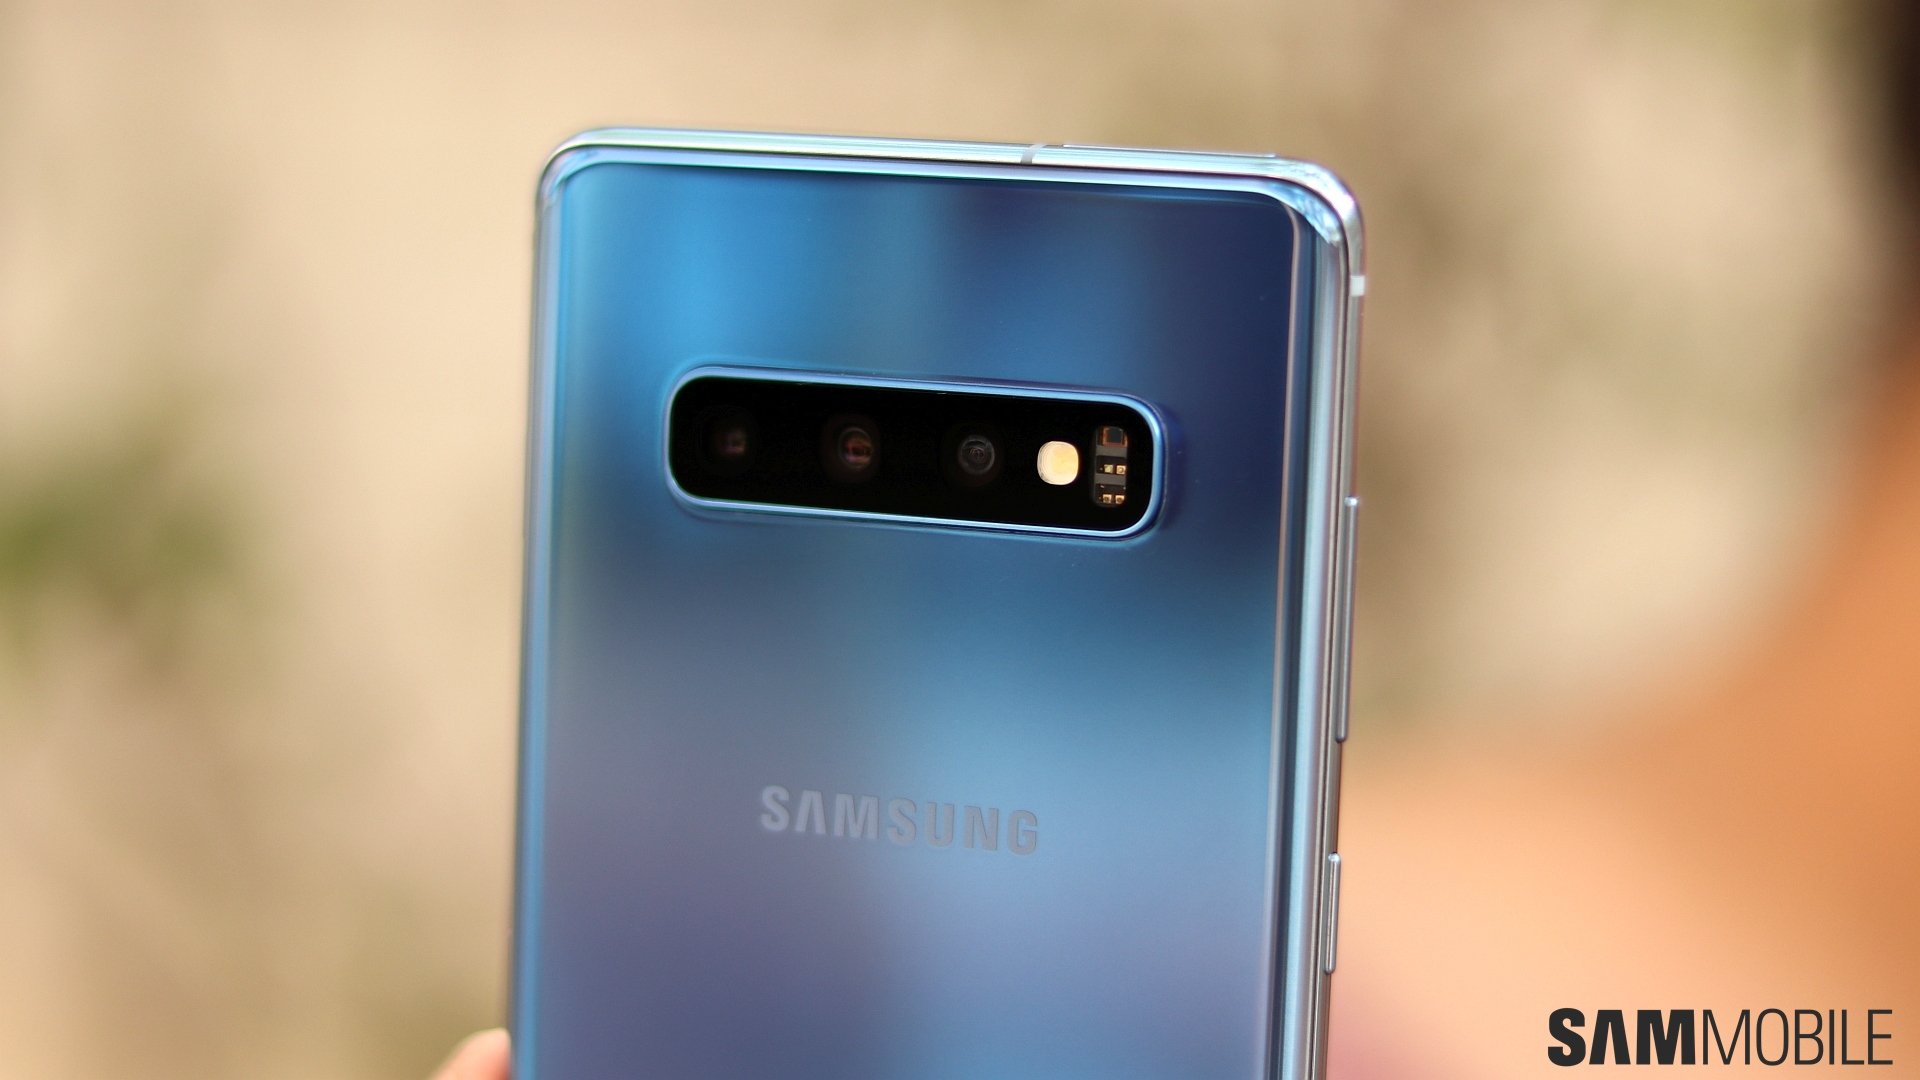 Samsung New Models 2019 Price In Pakistan